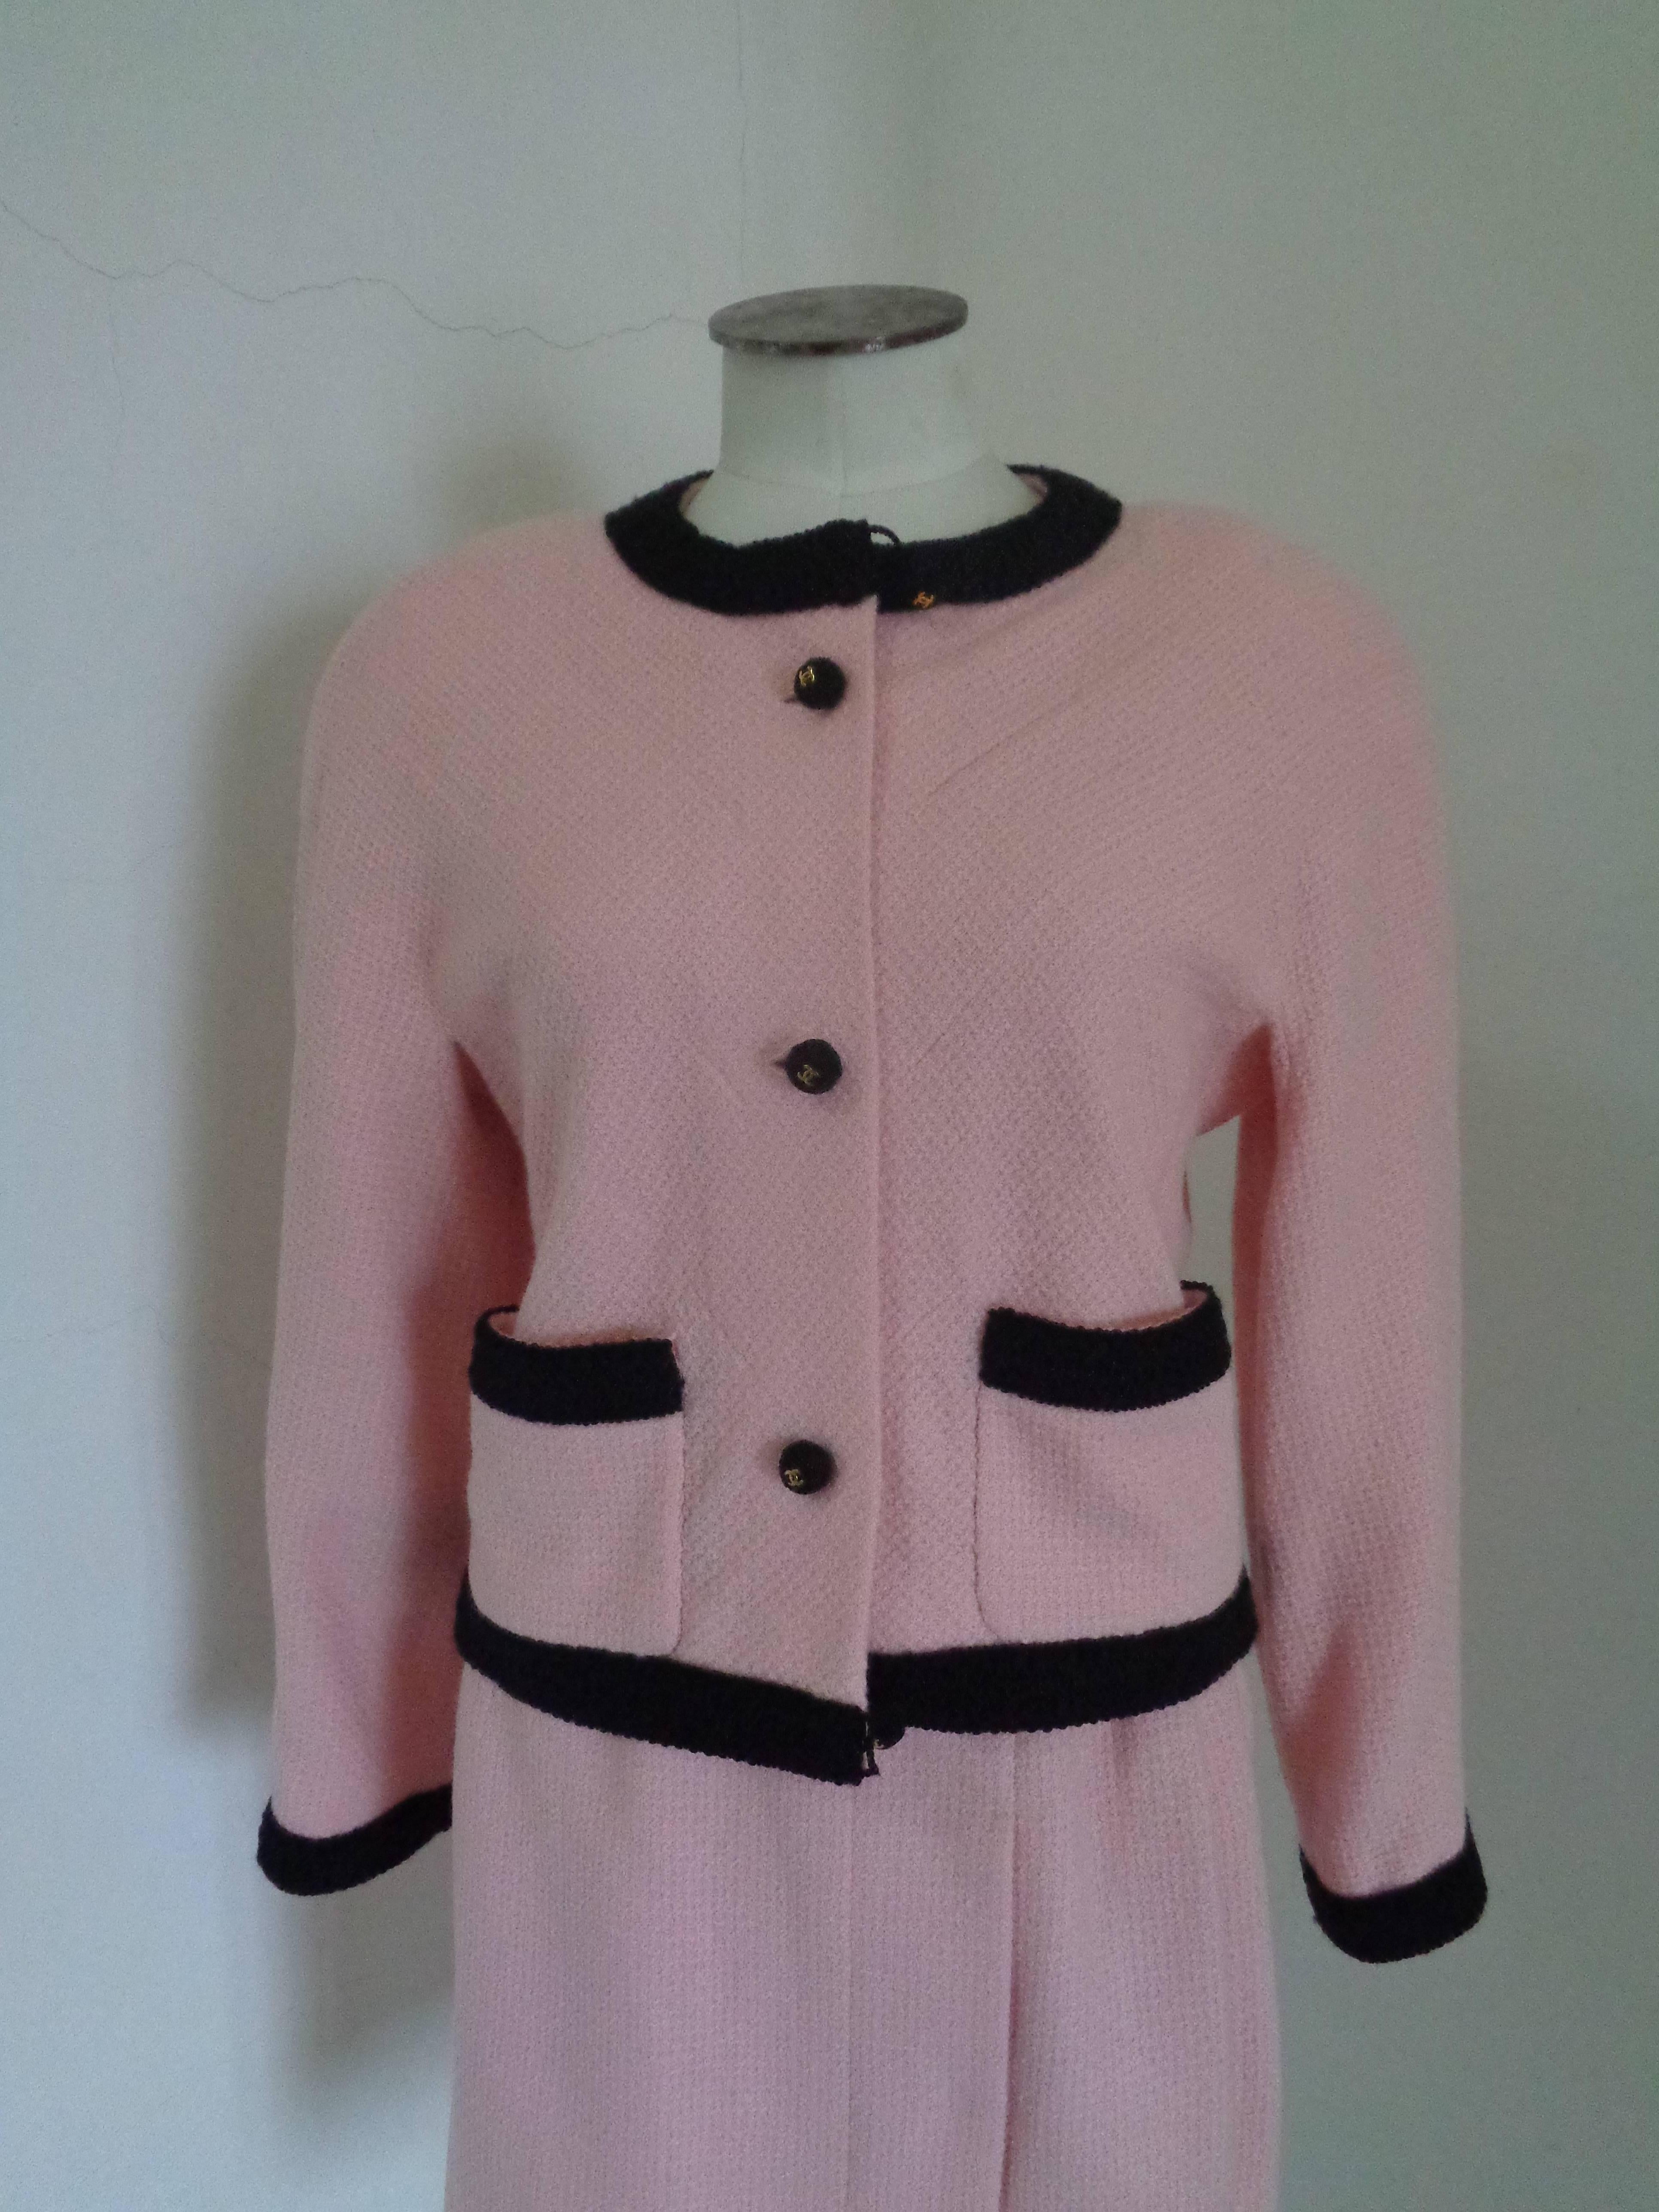 Chanel Pink Black with Gold Hardware Wool Skirt Suit

totally made in france in italian size range 42

Skirt lenght 50 cm 
skirt waist 72cm

jacket lenght 51 cm
shoulder to hem 45 cm
